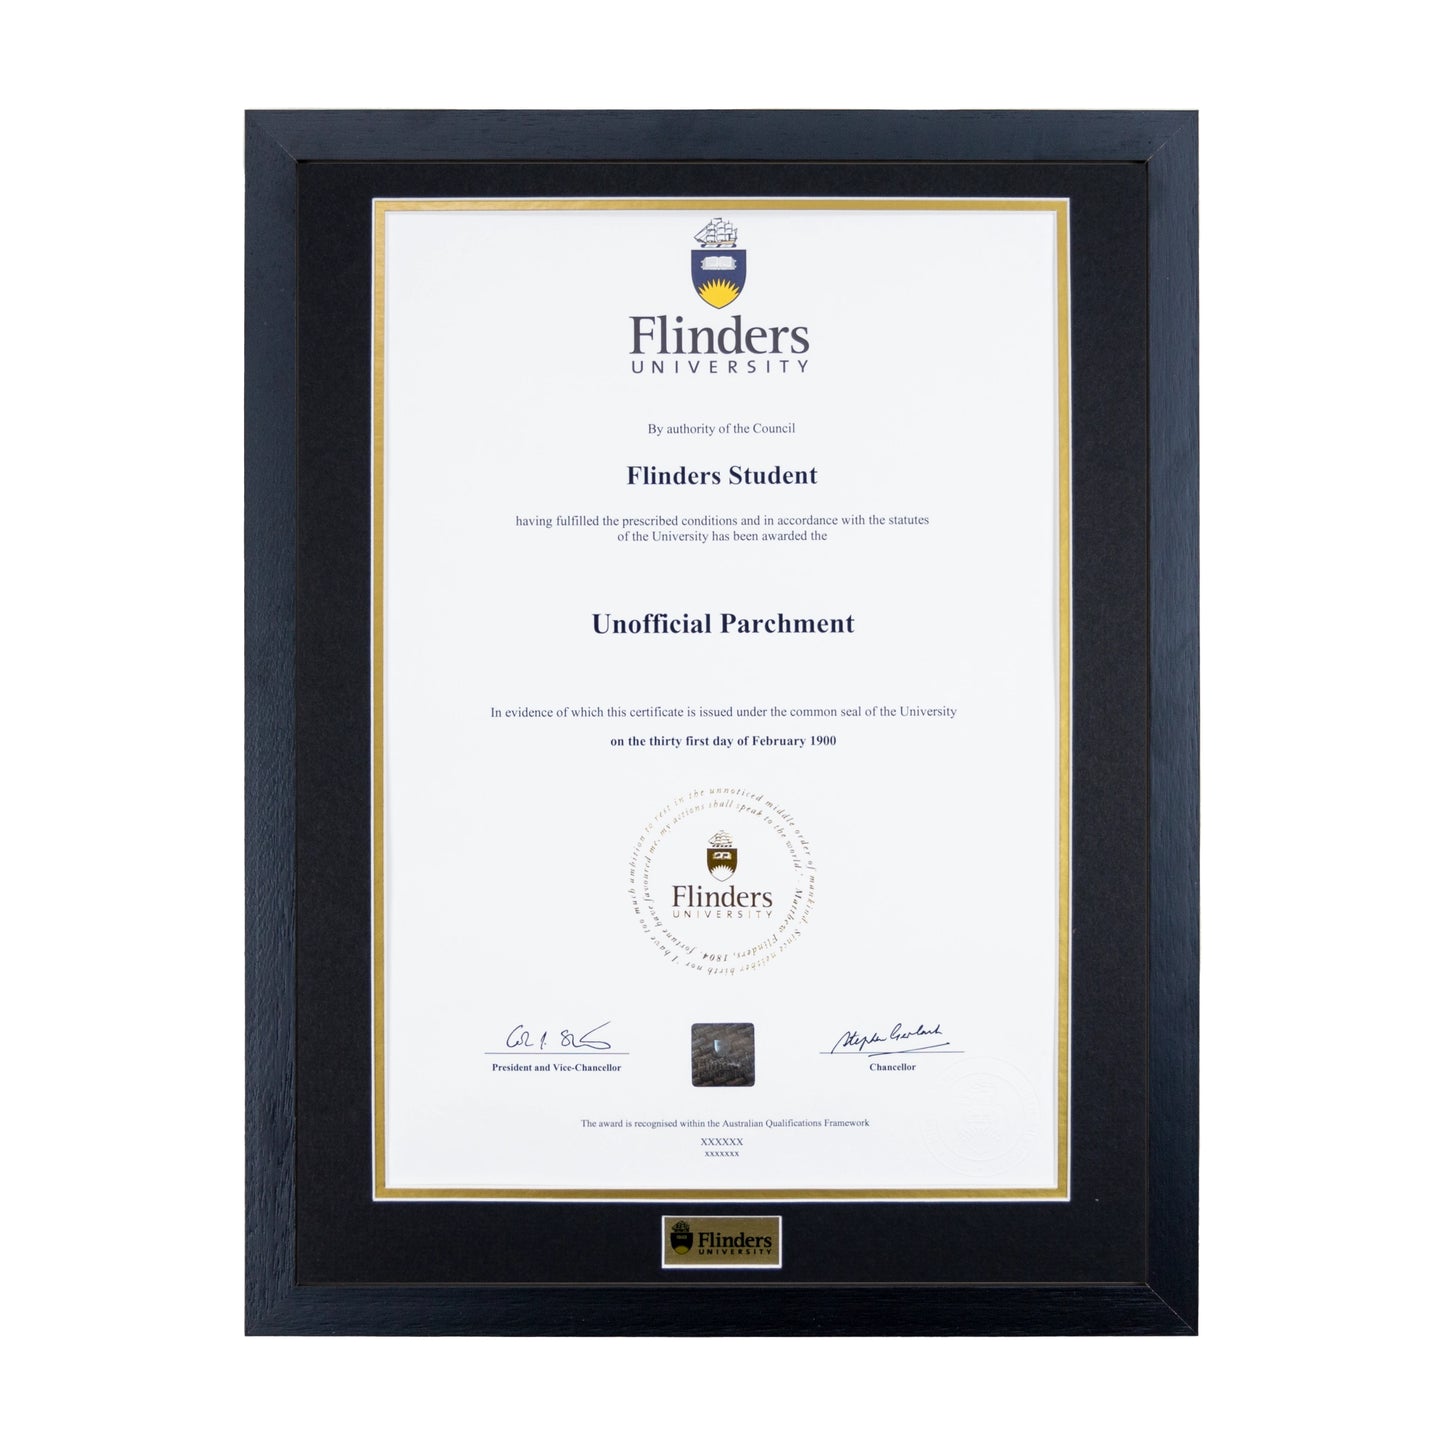 Flinders University Single Certificate Frame - Standard Black